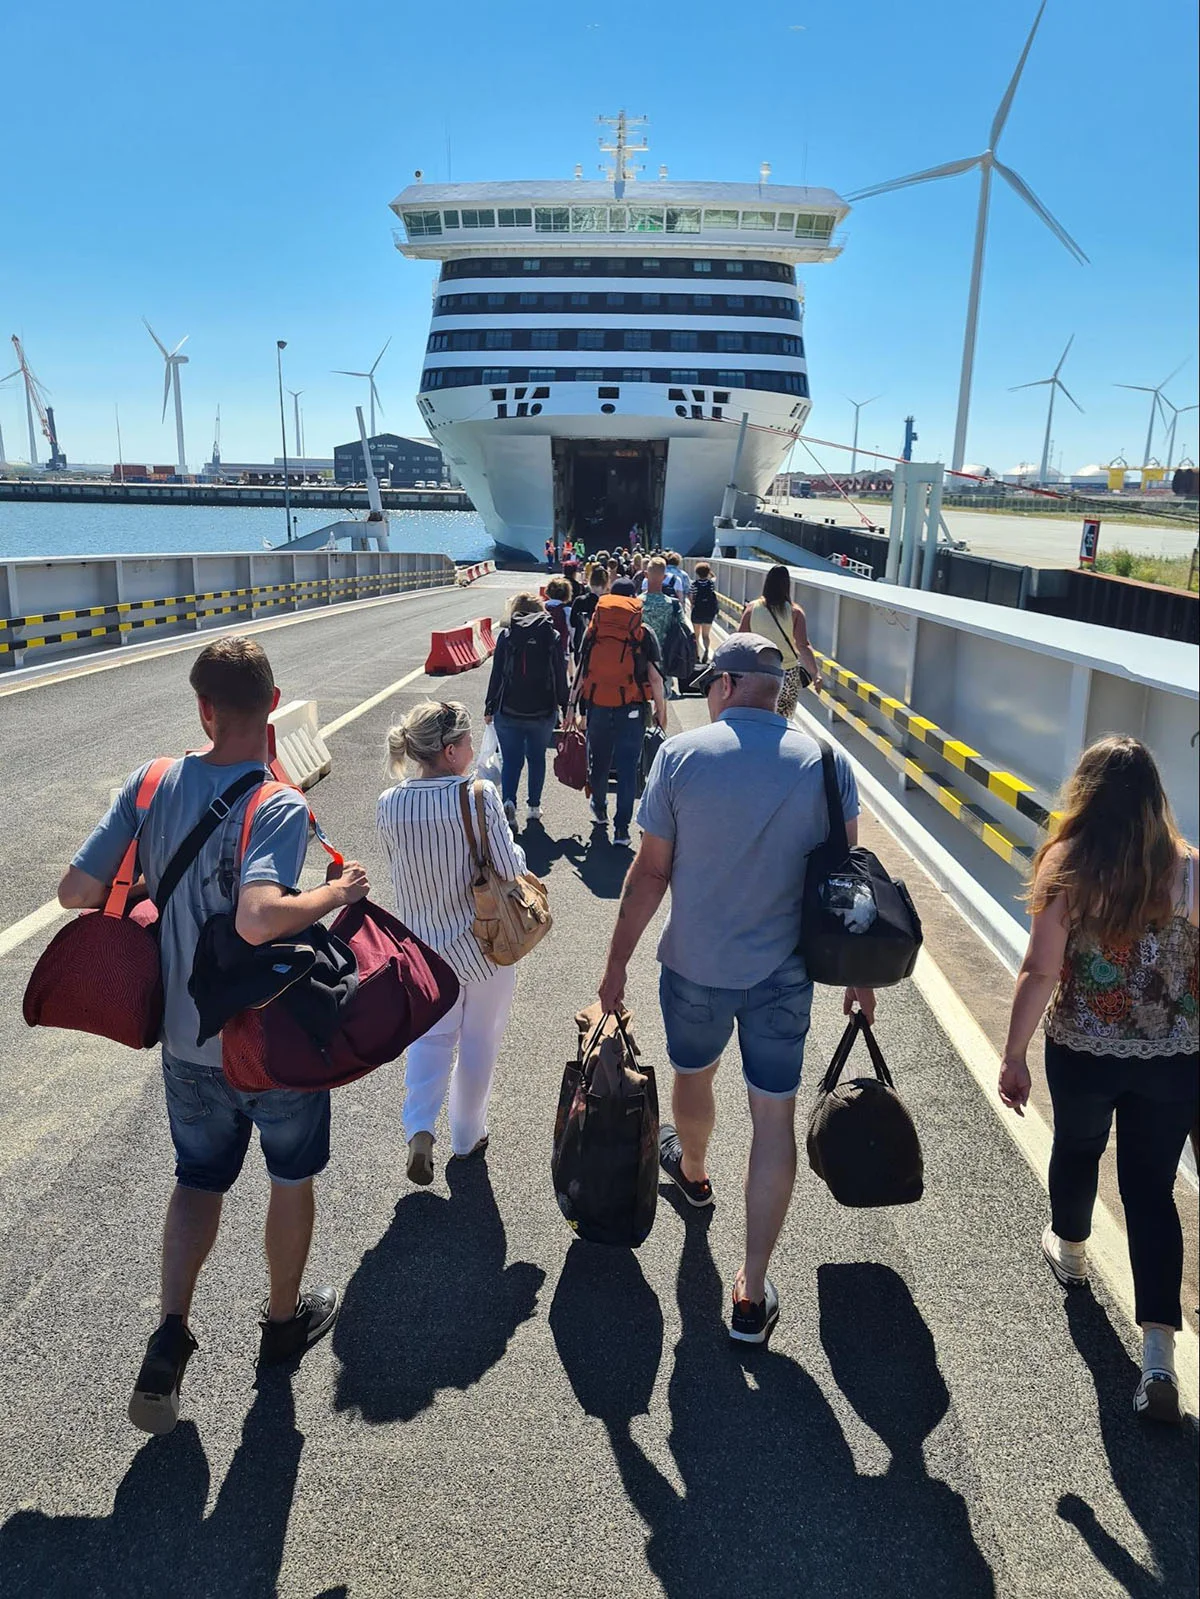 Holland-Norway foot passengers have to board via the car deck. Photo: Daniel Albert.